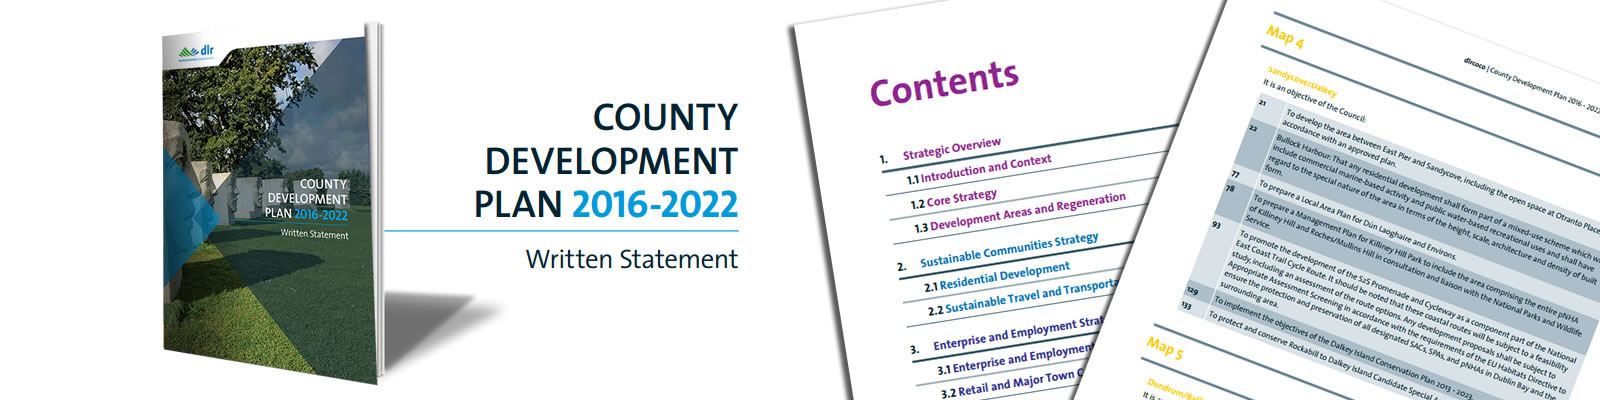 county development plan 2016-22